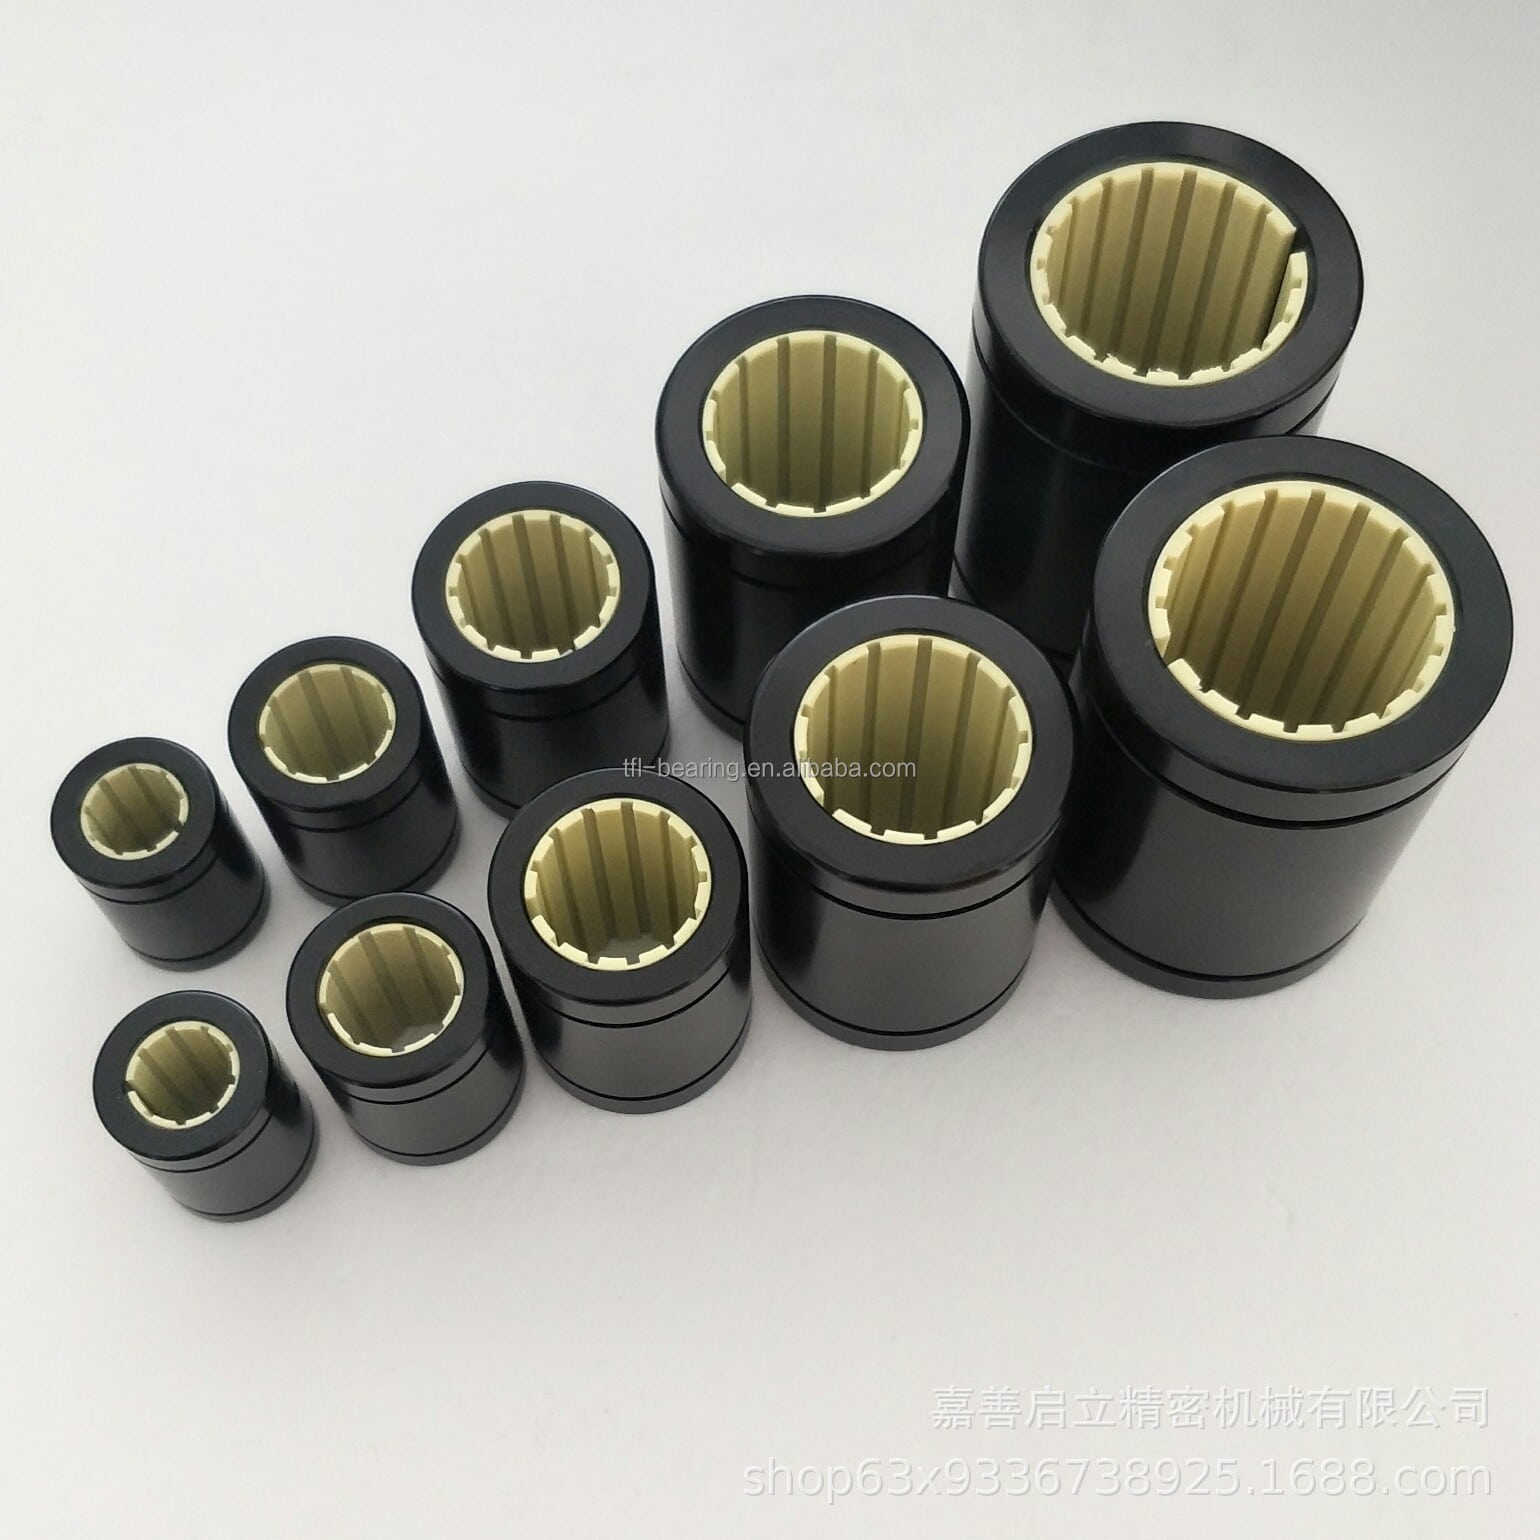 RJUM-02-12 self-lubricating bearing LIN-12R-12 Plastic linear bearings